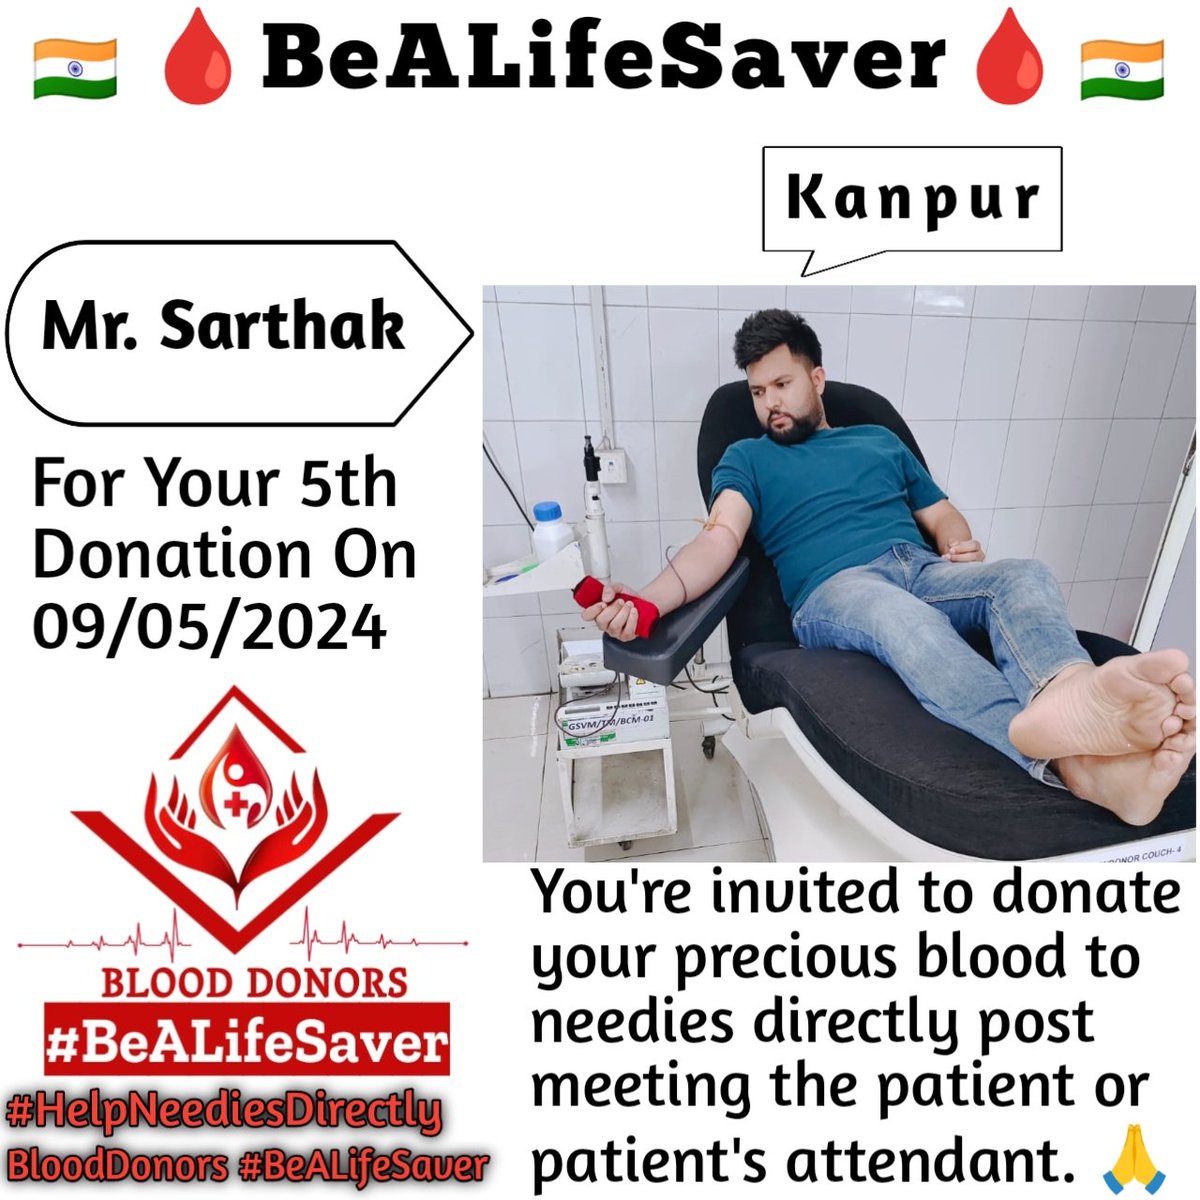 🙏 Congrats For 5th Blood Donation 🙏
Kanpur BeALifeSaver
Kudos_Mr_Sarthak_Ji

Today's hero
Mr. Sarthak Ji donated blood in Kanpur for the 5th Time for one of the needies. Heartfelt Gratitude and Respect to Sarthak Ji for his blood donation for Patient admitted in Kanpur.